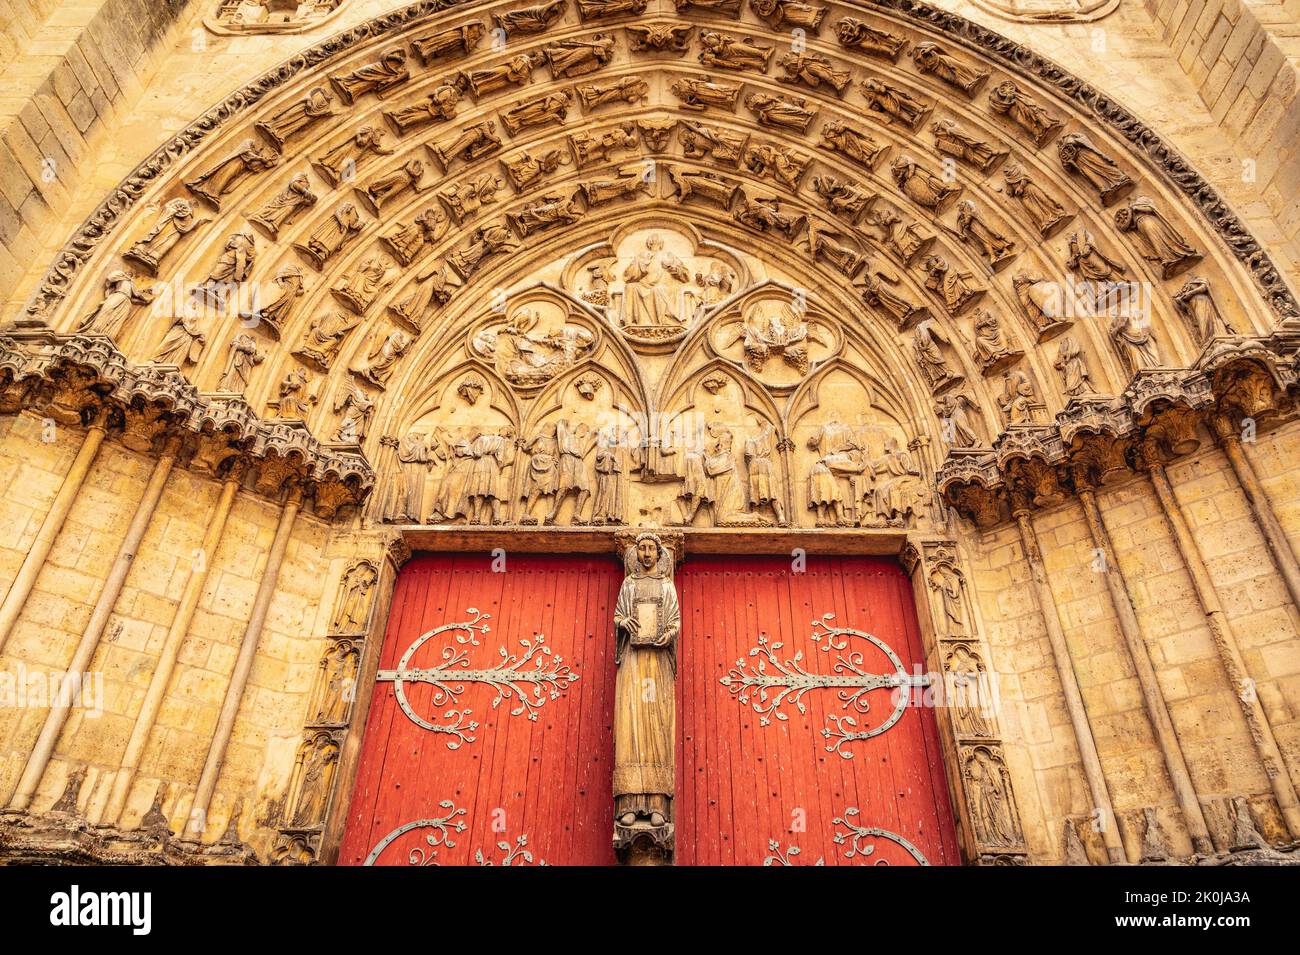 Estatua-columna de San Esteban, fachada oeste (1190-1200) de la primera catedral gótica de Francia en Sens, Borgoña Foto de stock